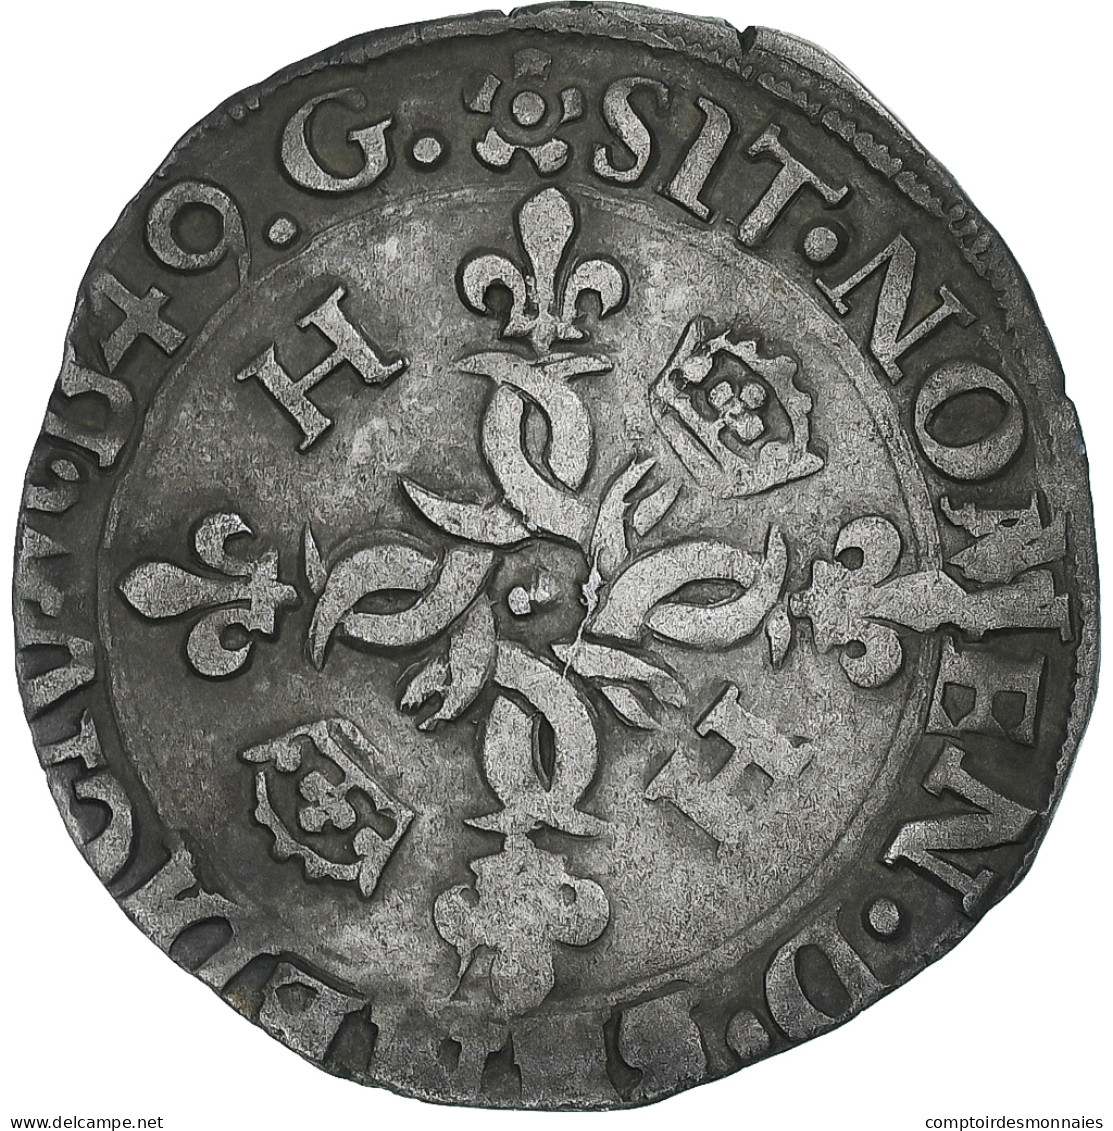 France, Henri II, Douzain Aux Croissants, 1549, Grenoble, TTB, Billon - 1547-1559 Henry II